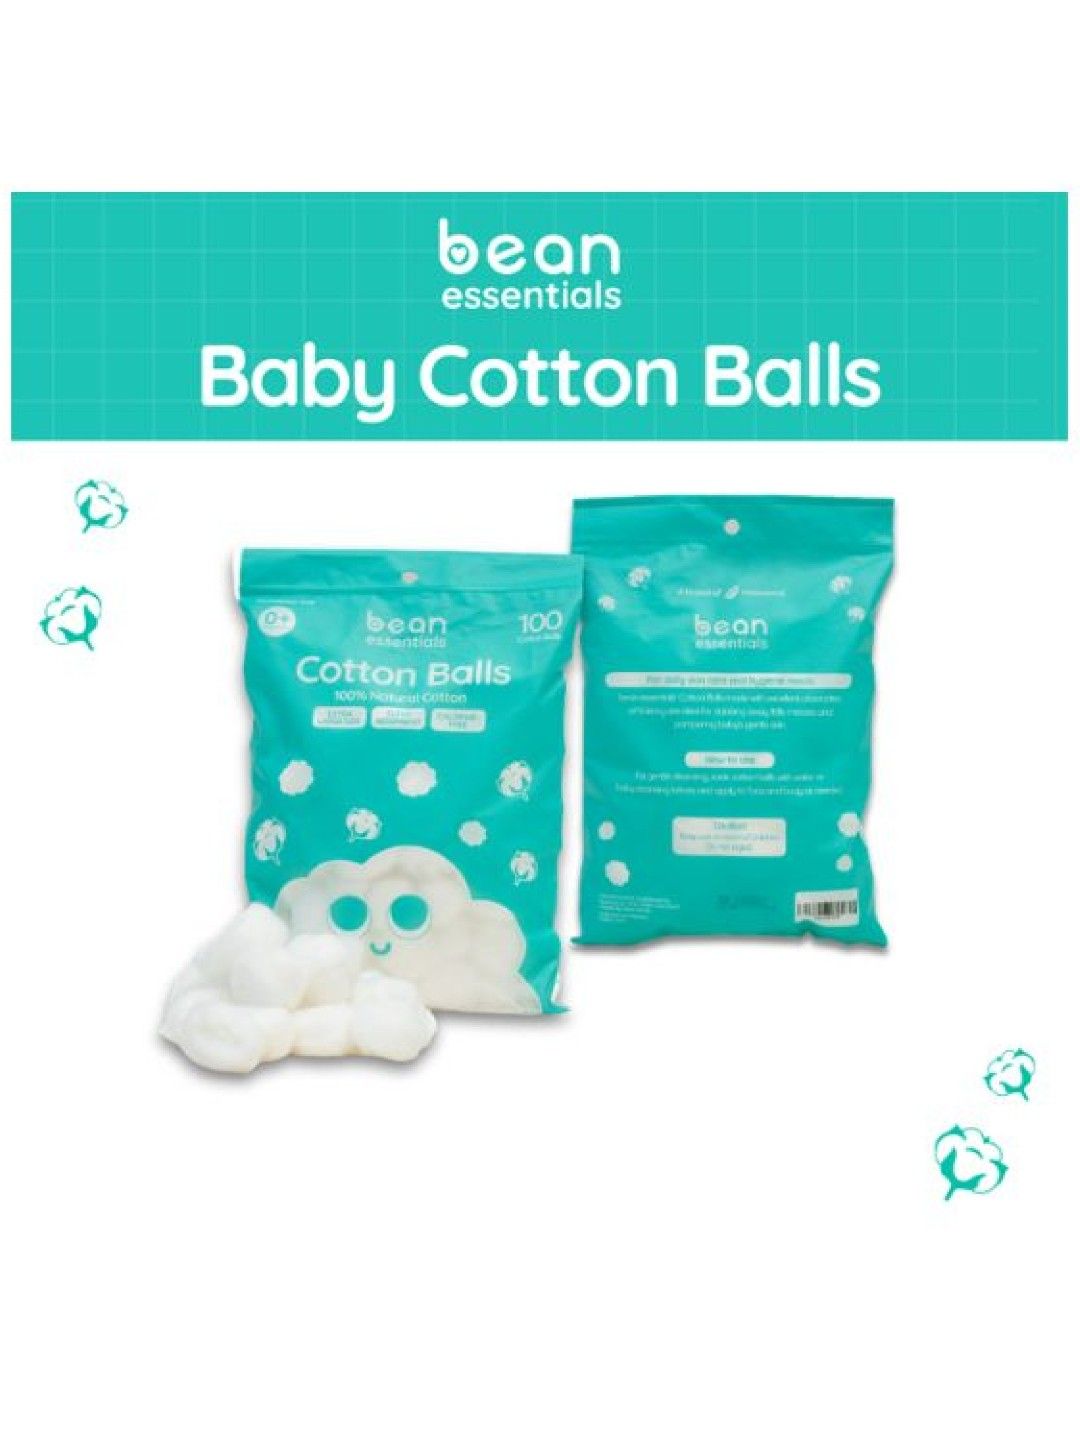 bean essentials Baby Cotton Balls 100g (100s) (No Color- Image 1)